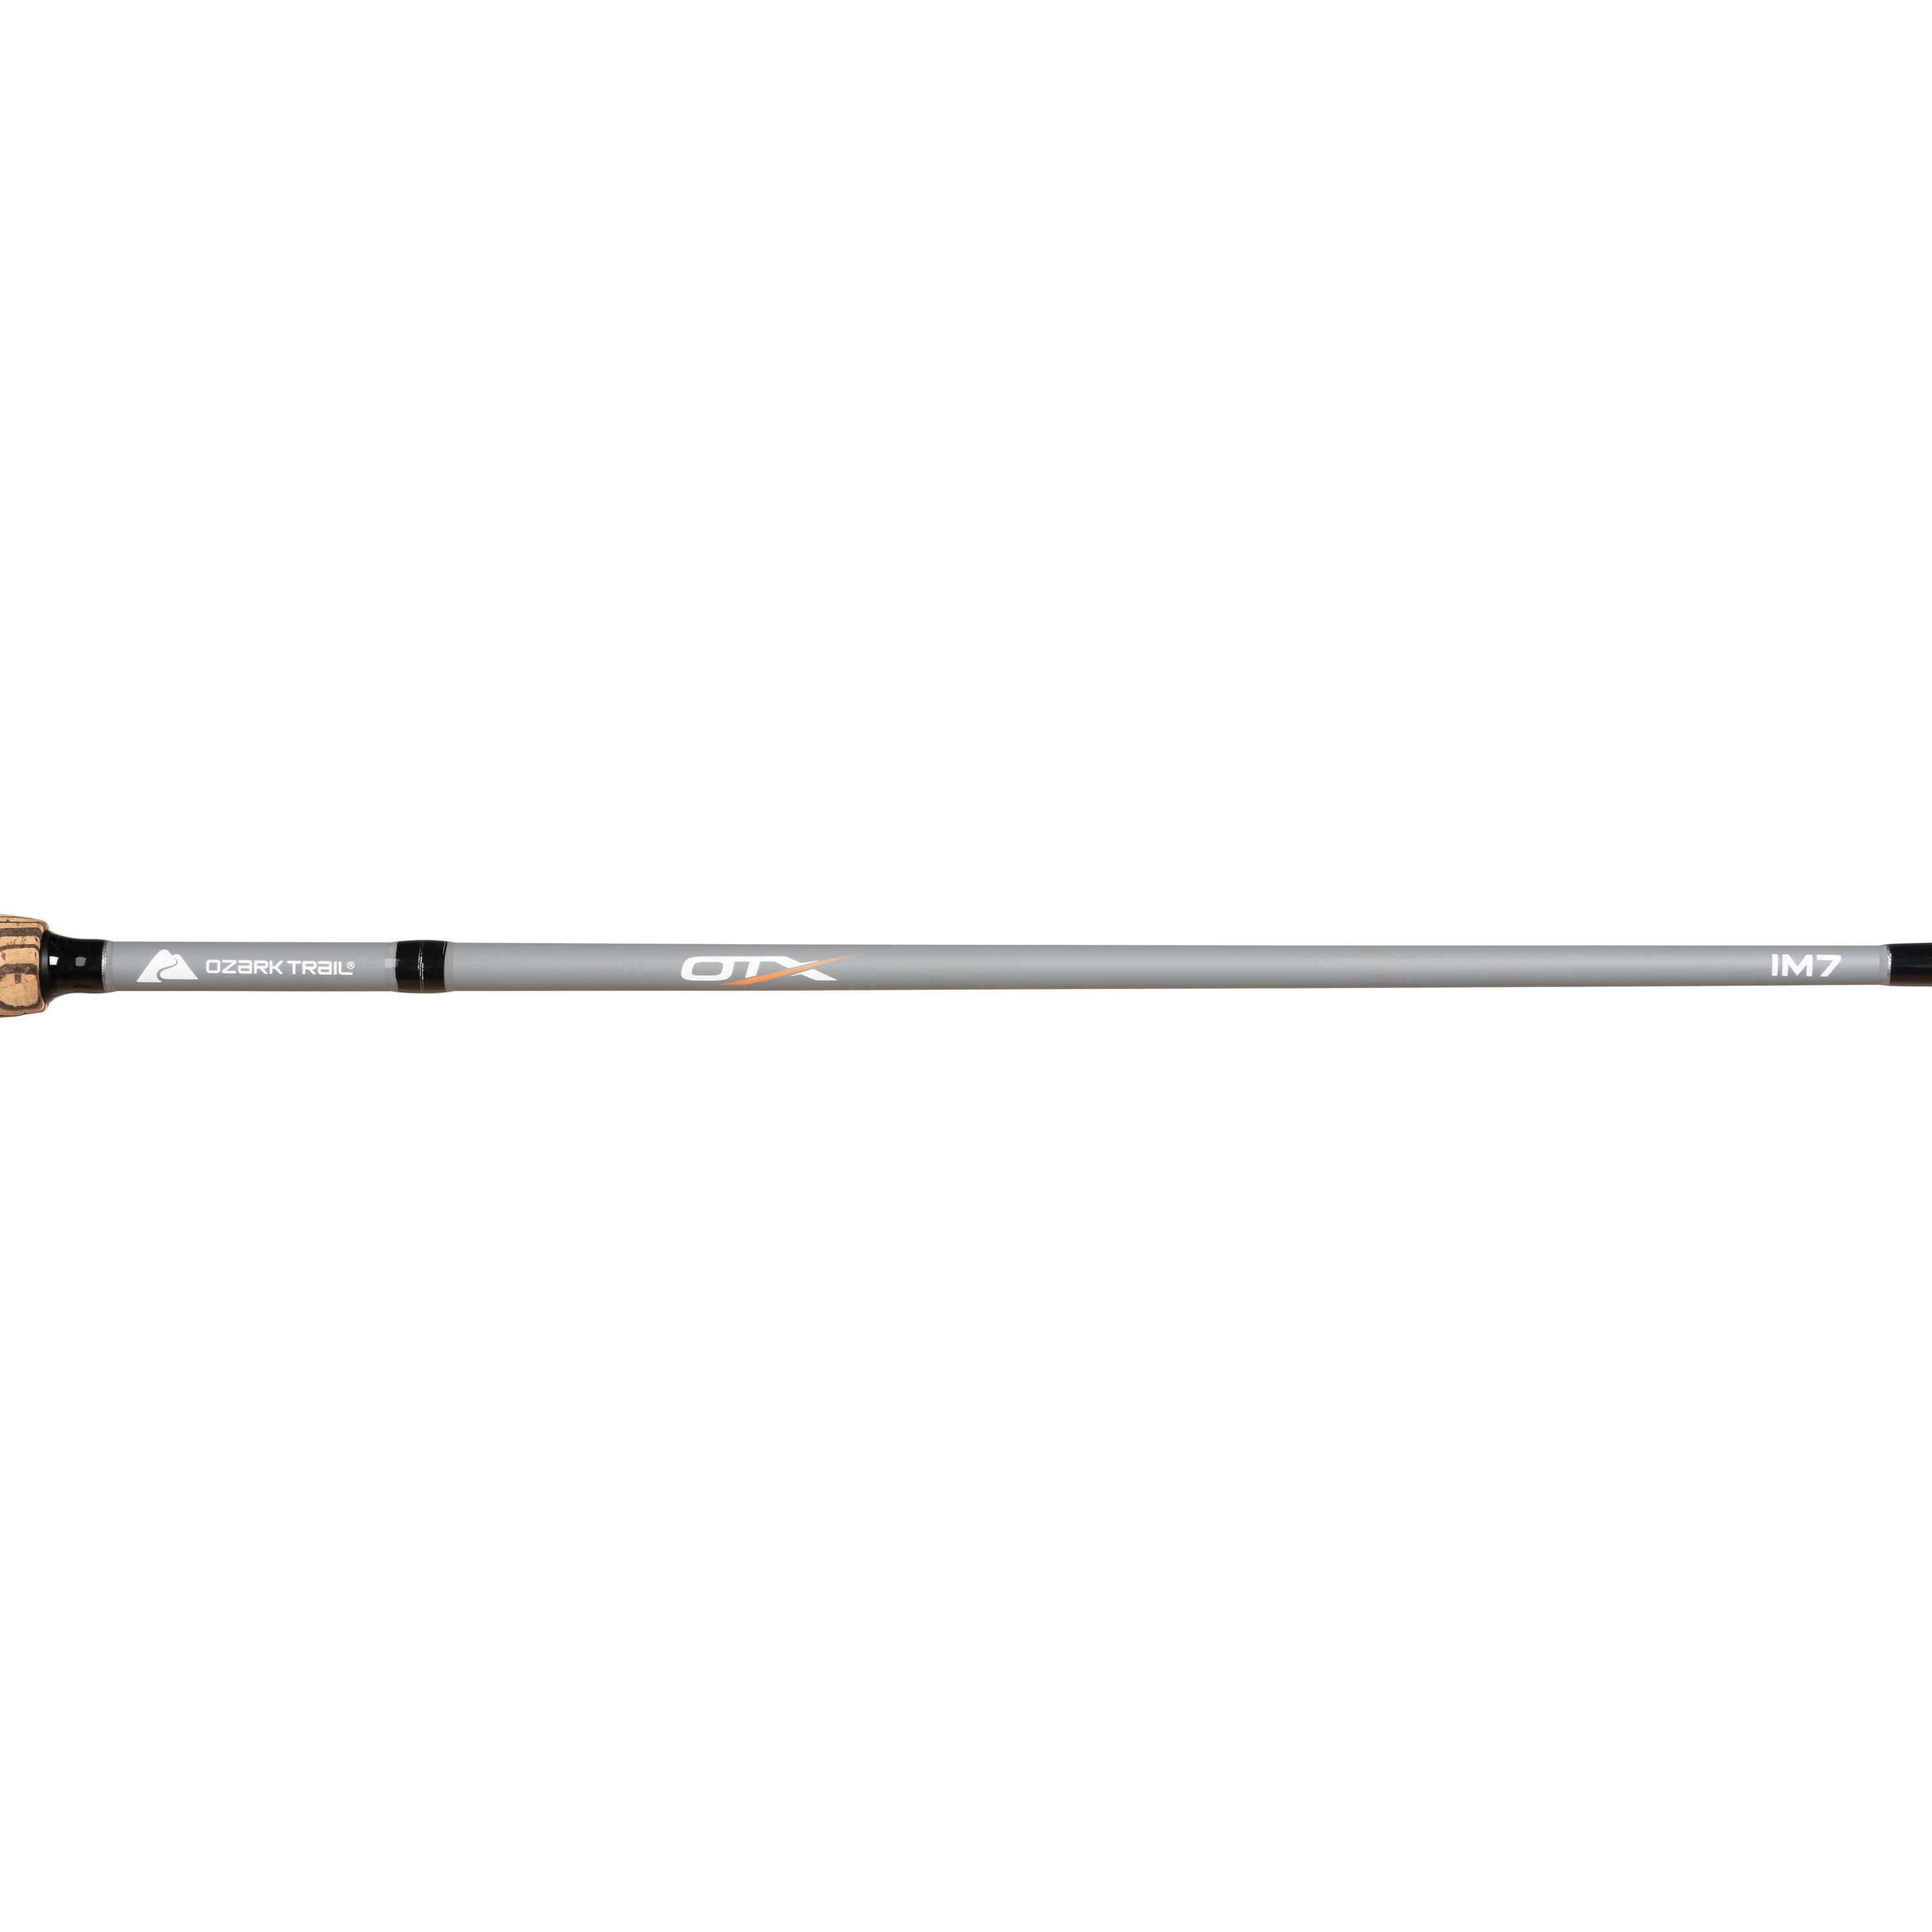 Ozark Trail OTX Spinning Fishing Rod, Medium Action, 7ft - image 2 of 6